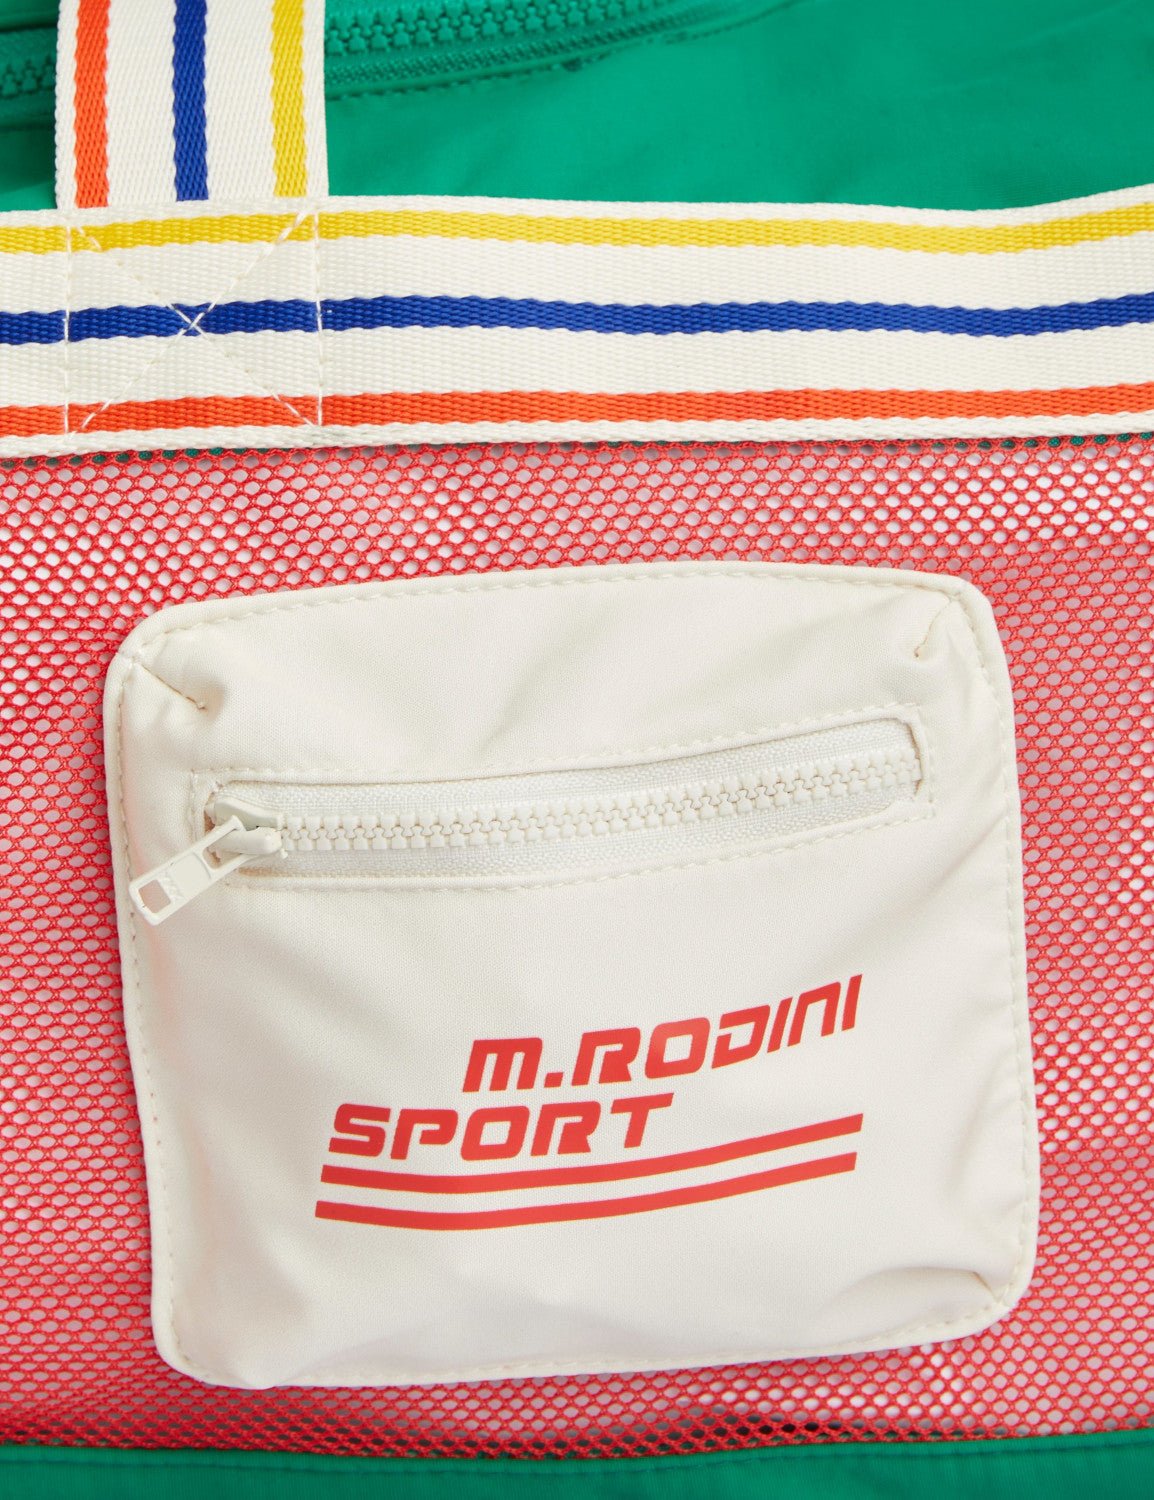 M.Rodini Sport Duffel Bag by Mini Rodini - Petite Belle